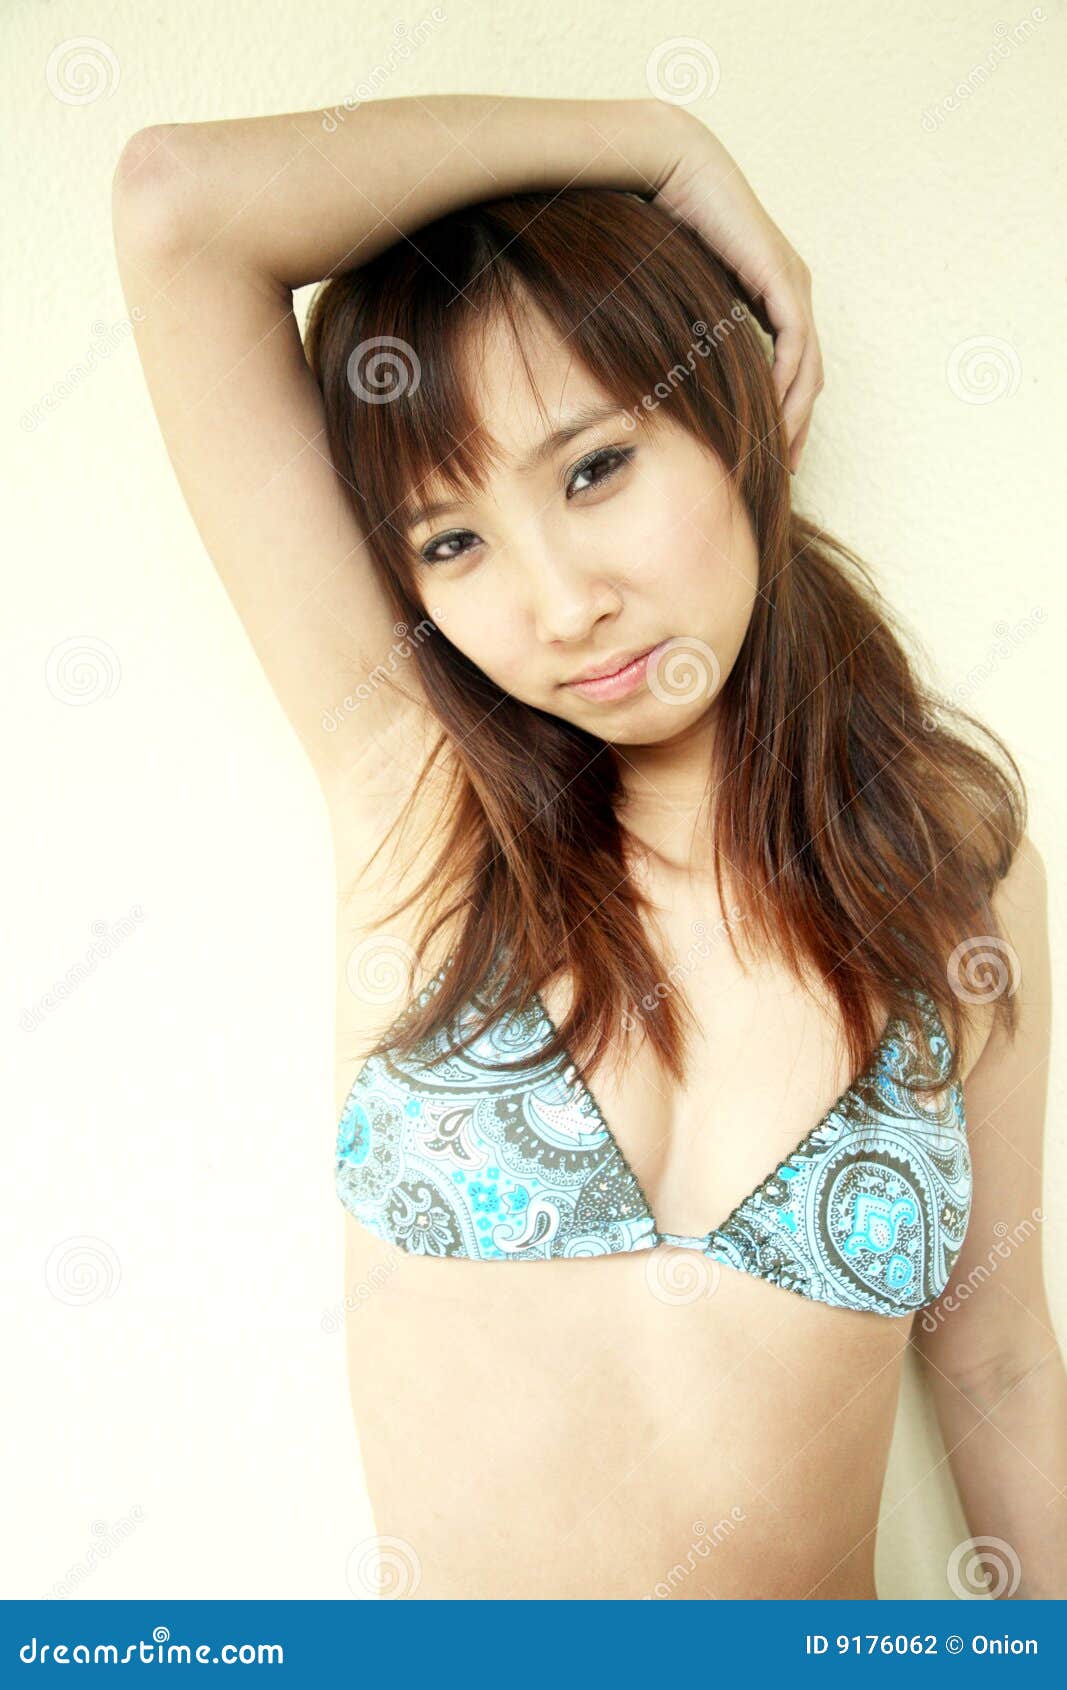 Cute Asian Girl in a Bikini Stock Photo picture